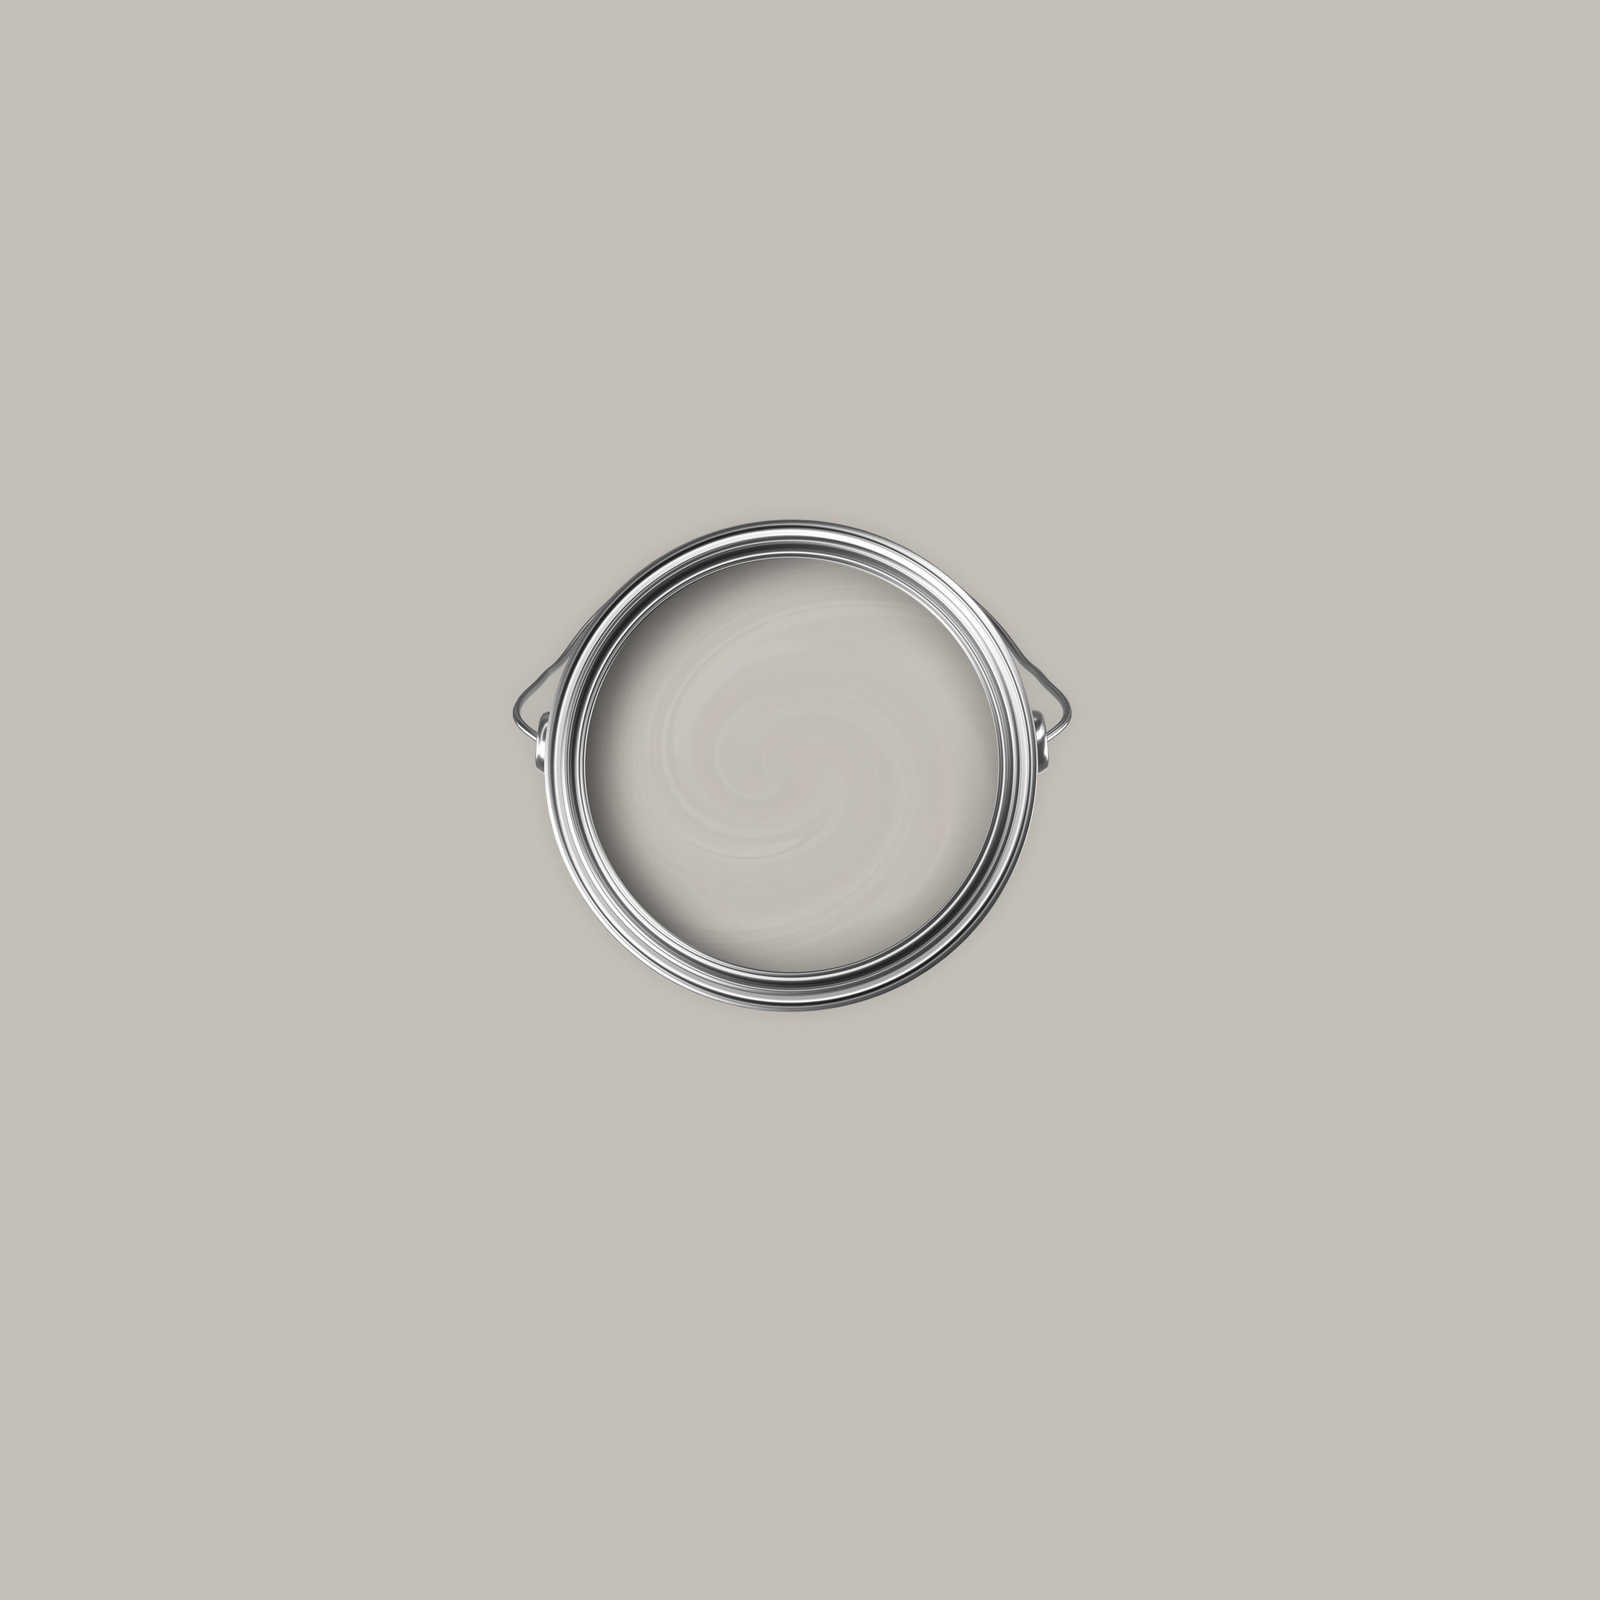             Premium Wandfarbe sanftes Seidengrau »Creamy Grey« NW111 – 1 Liter
        